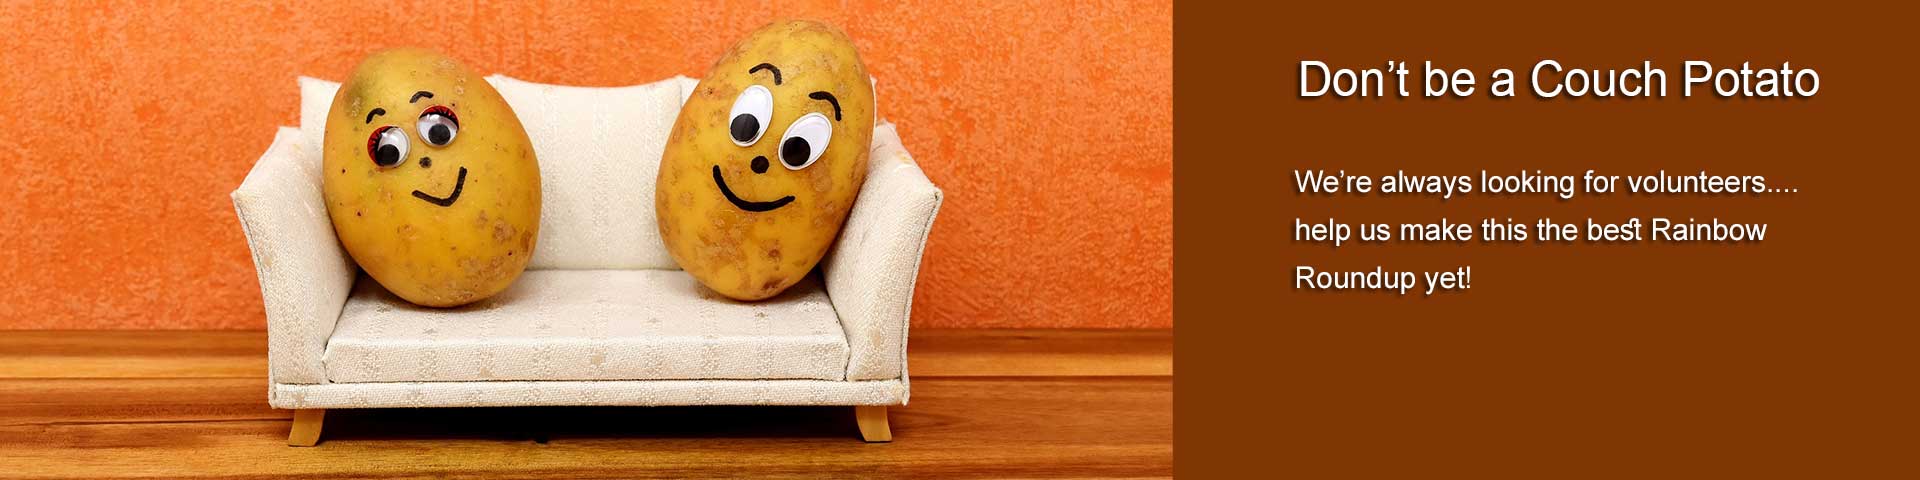 couch potato2